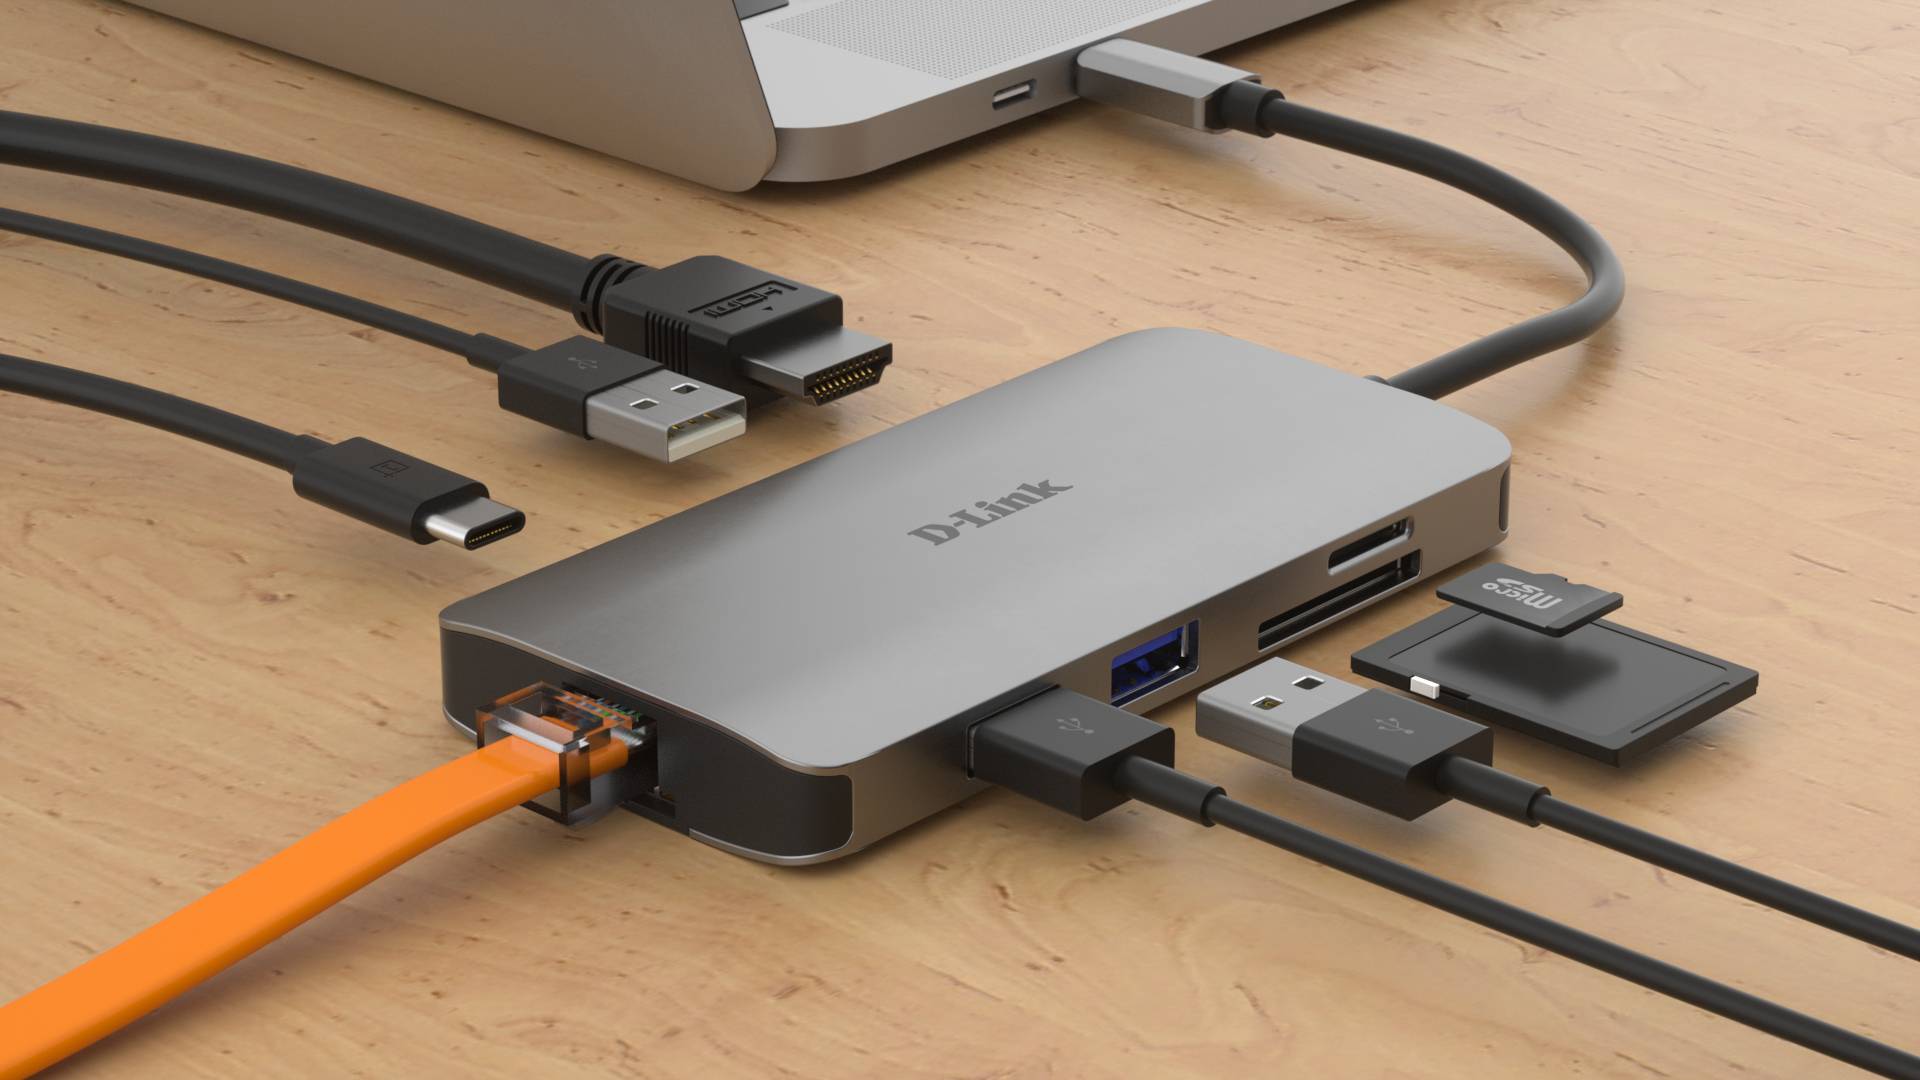 Rca Informatique - image du produit : 8-IN-1 USB-C HUB WITH HDMI ETHERNET/CARD READER/PDELIVERY